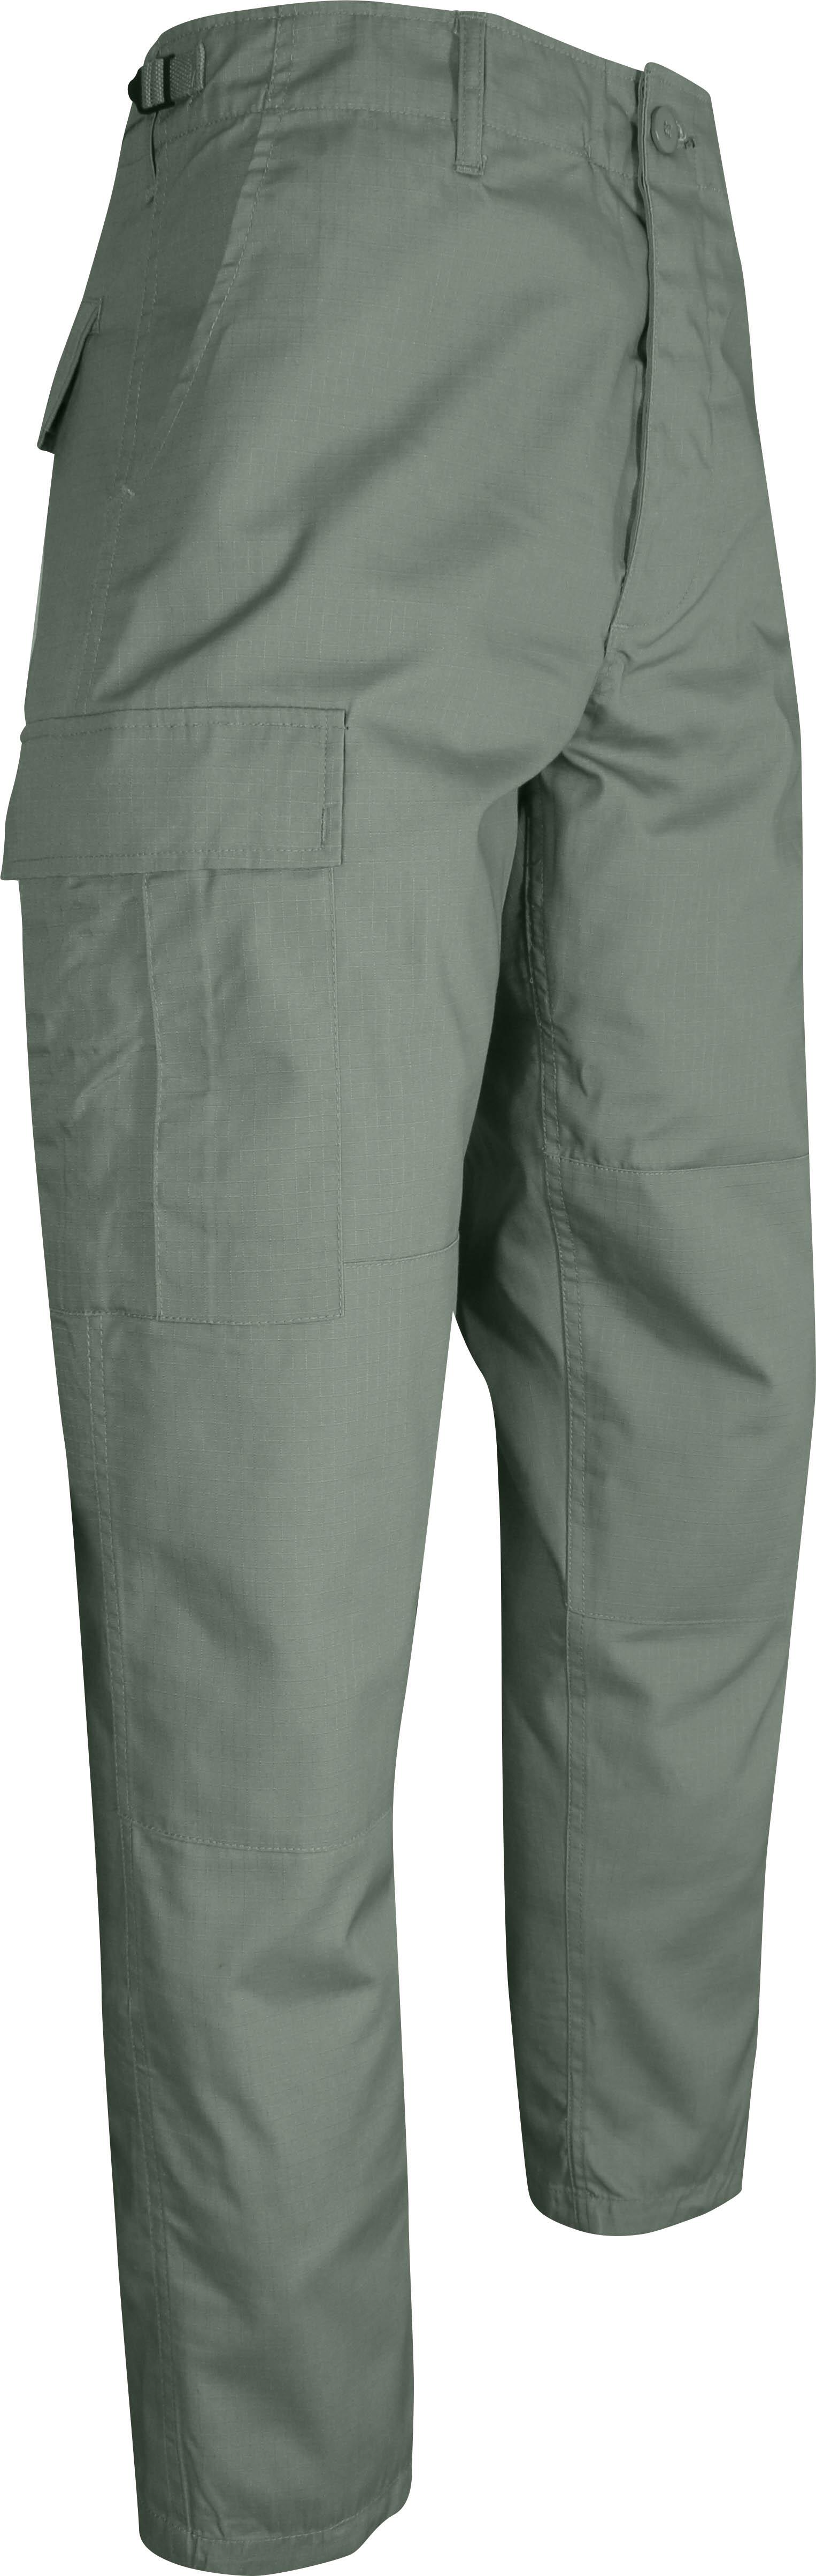 Viper Tactical BDU Trousers - Green